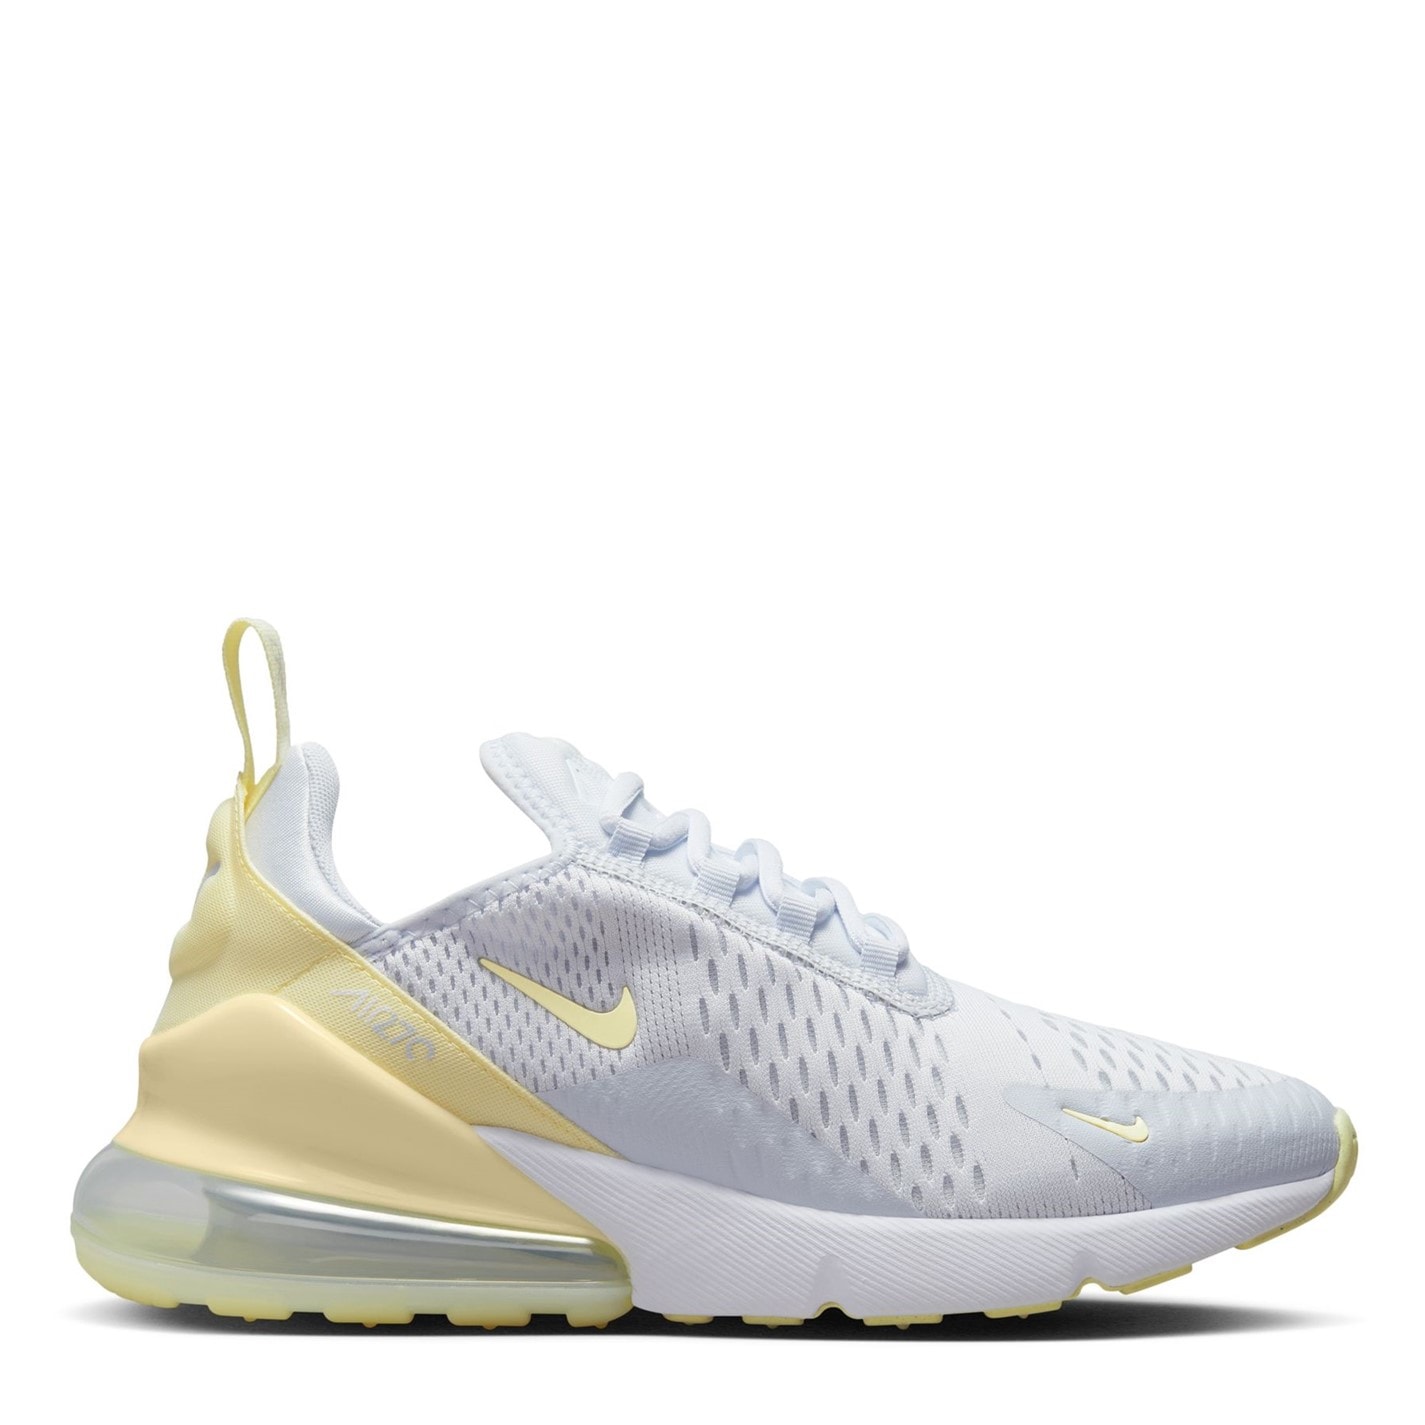 Adidasi sport Nike Air Max 270 pentru Femei alb gri galben